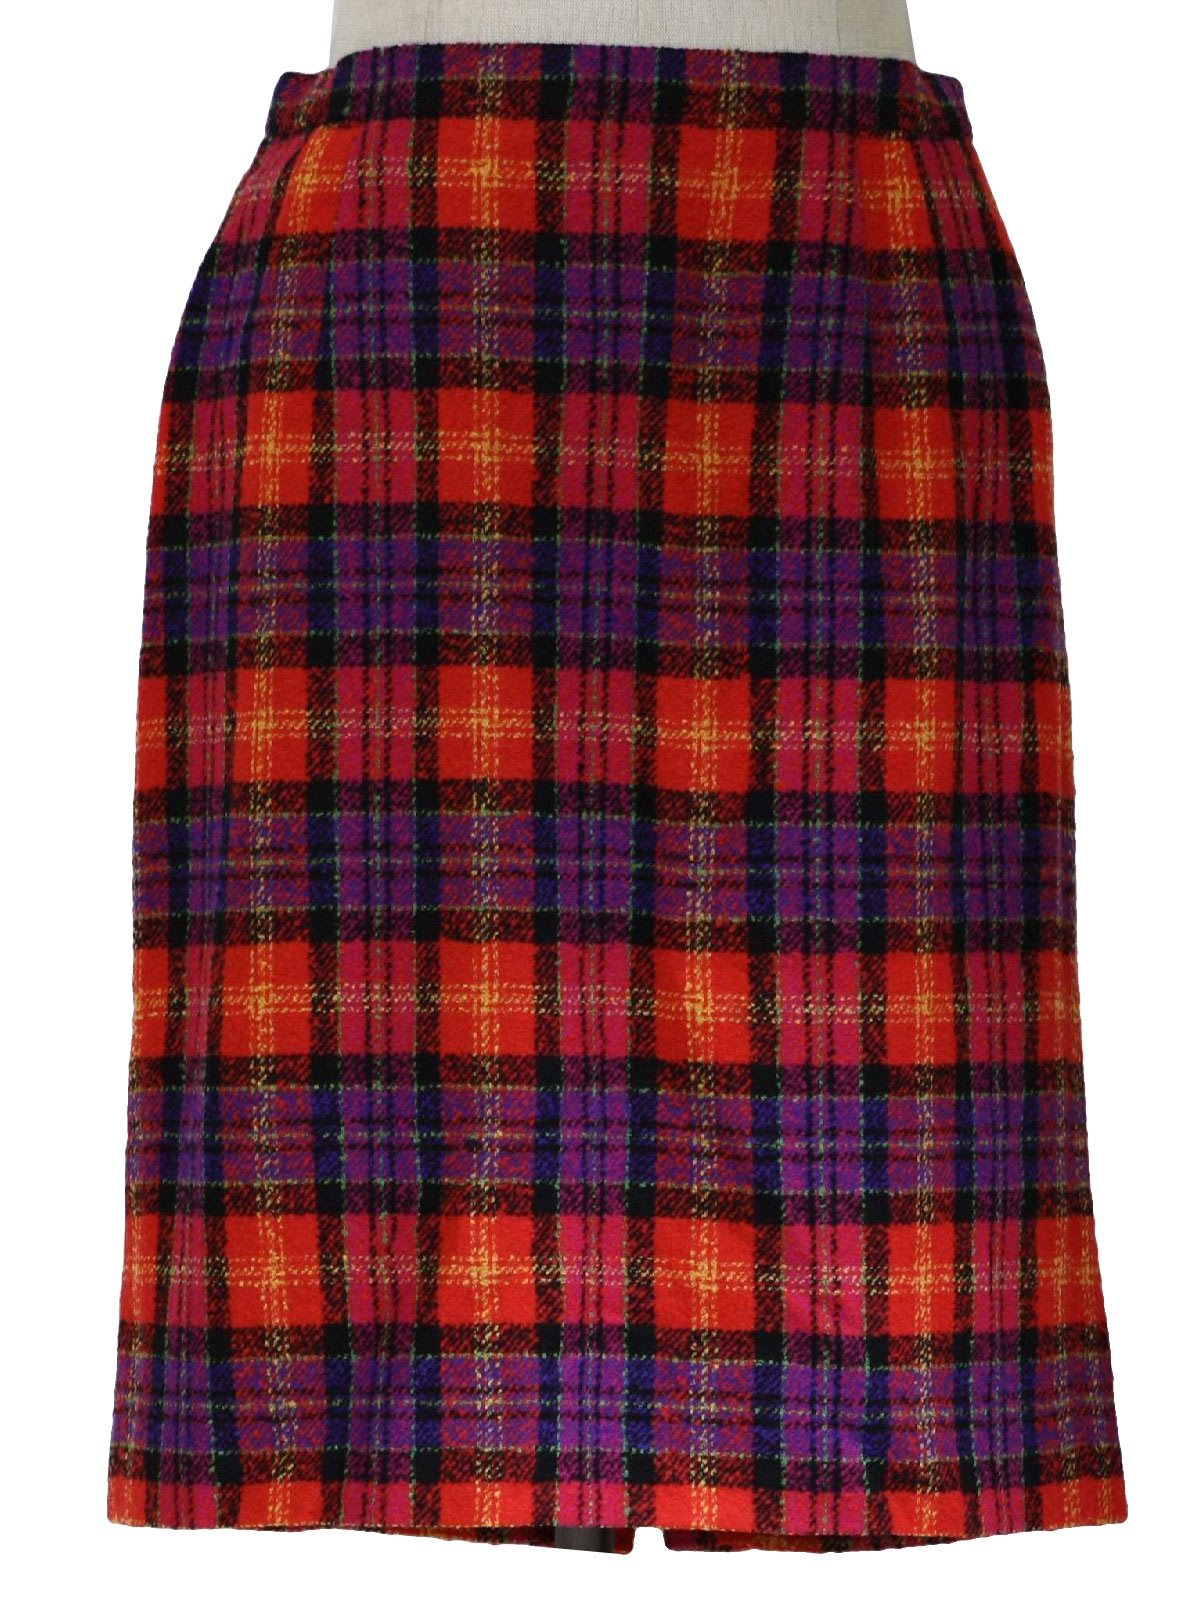 Retro 80s Wool Skirt (Laurel) : 80s -Laurel- Womens red, black, purple ...